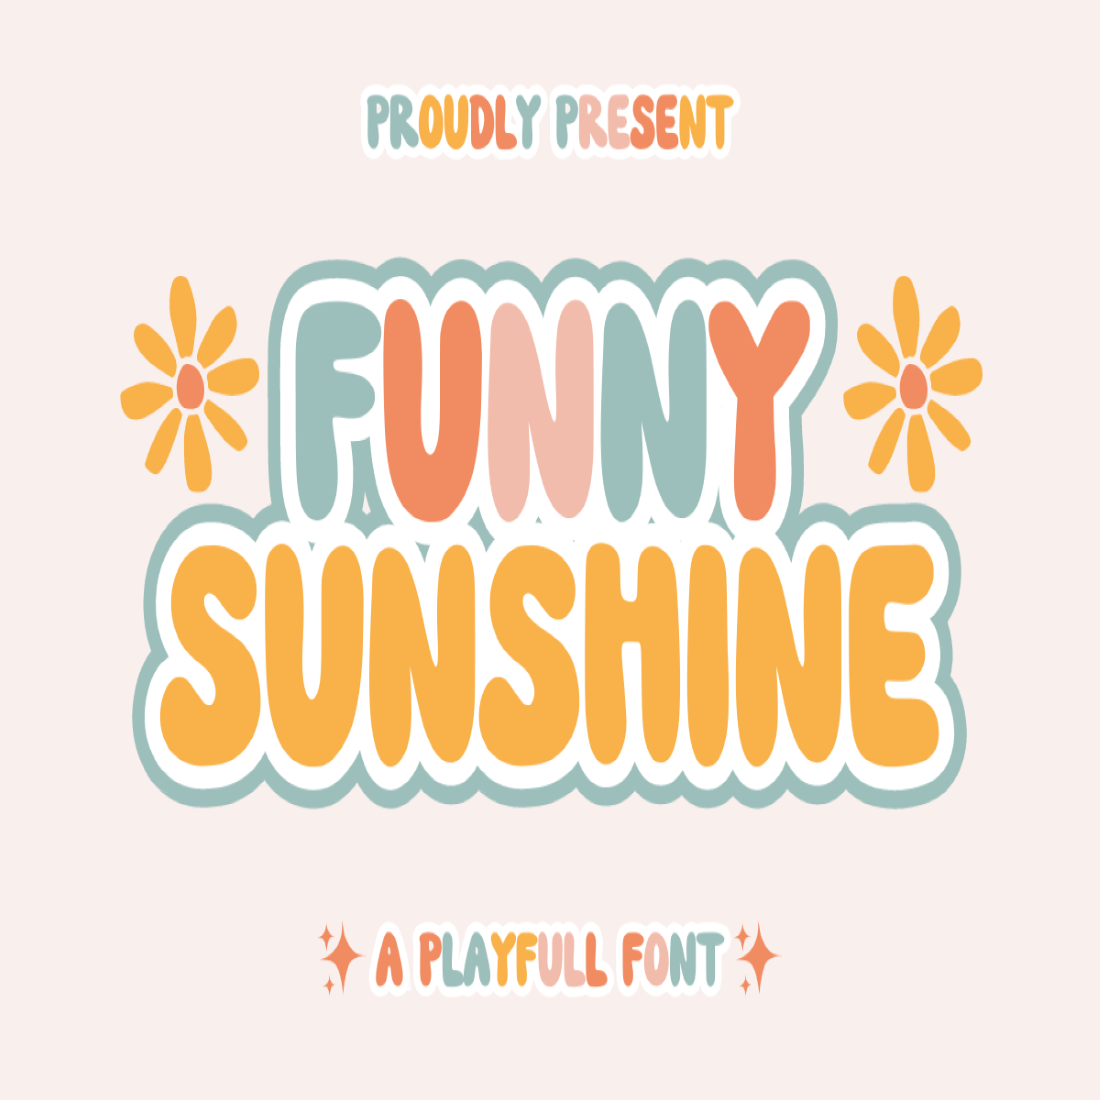 Funny Sunshine cover image.